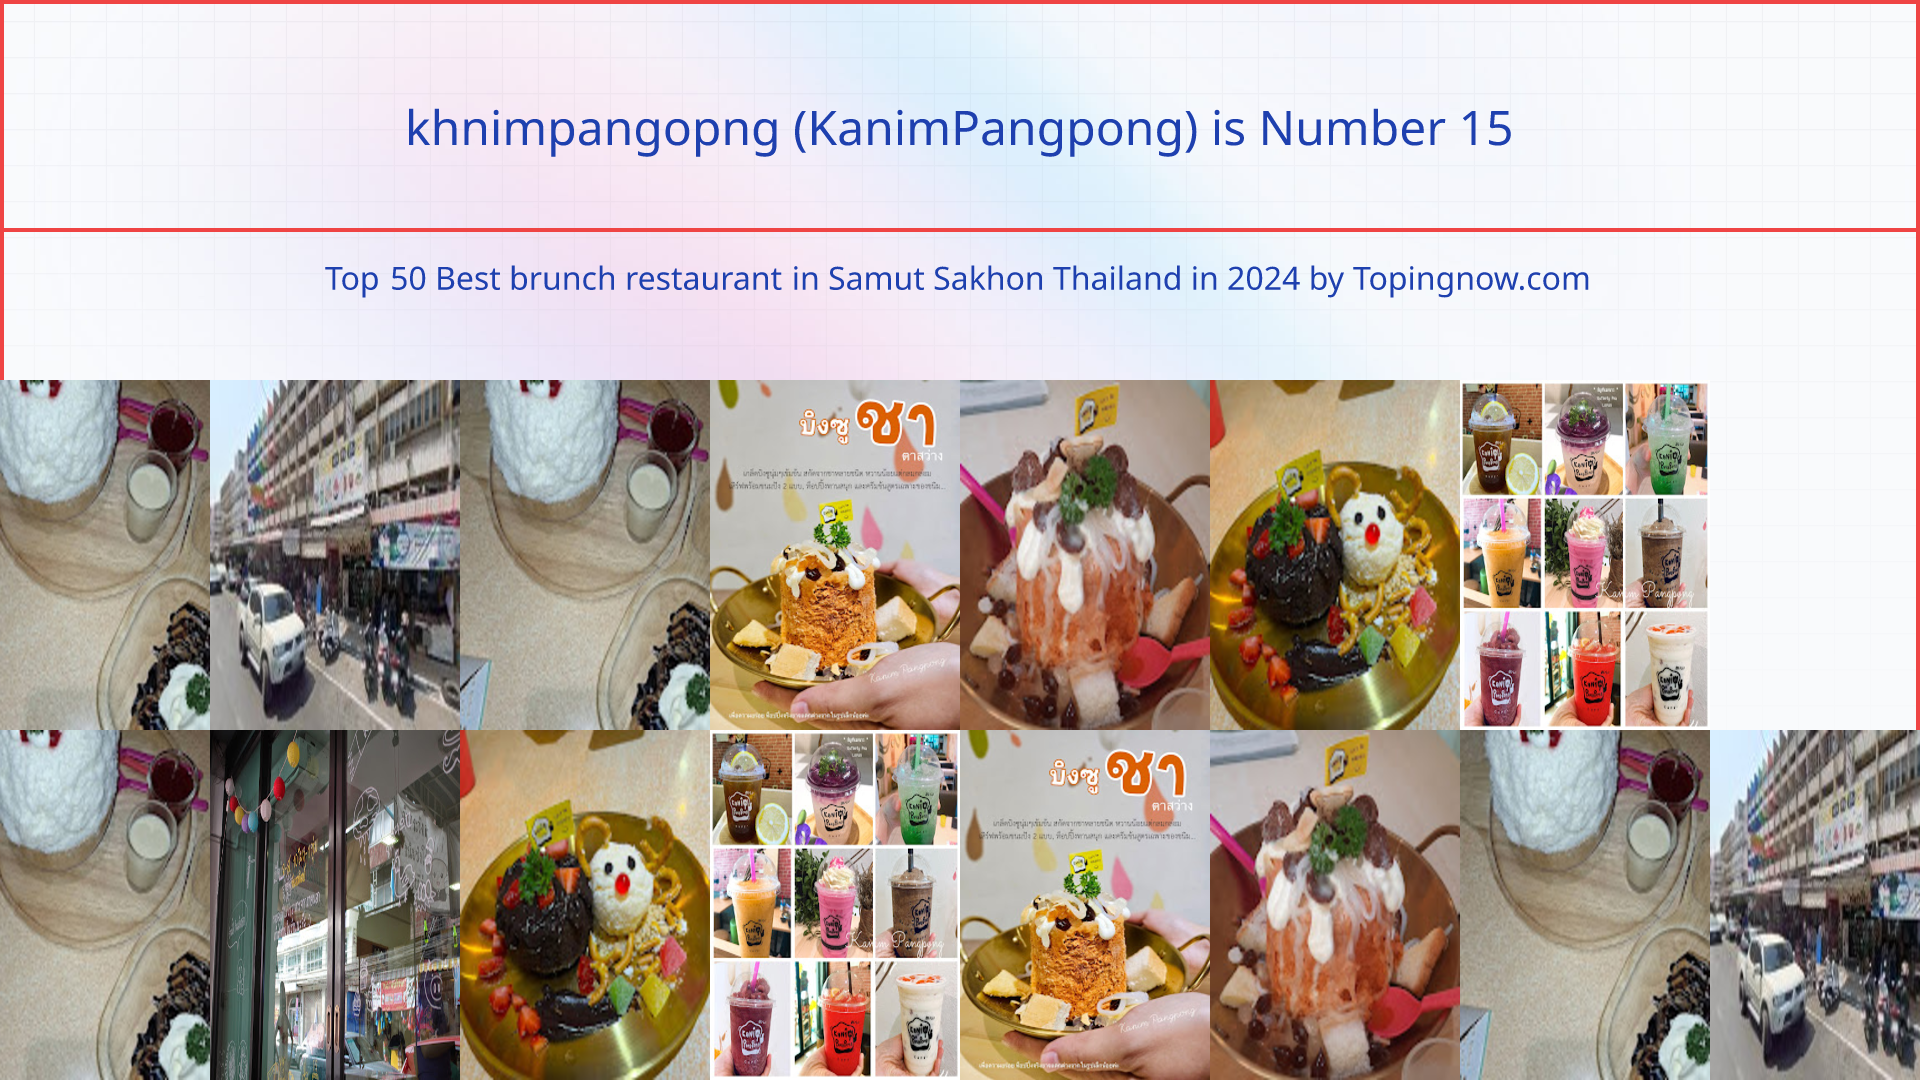 khnimpangopng (KanimPangpong): Top 50 Best brunch restaurant in Samut Sakhon Thailand in 2024